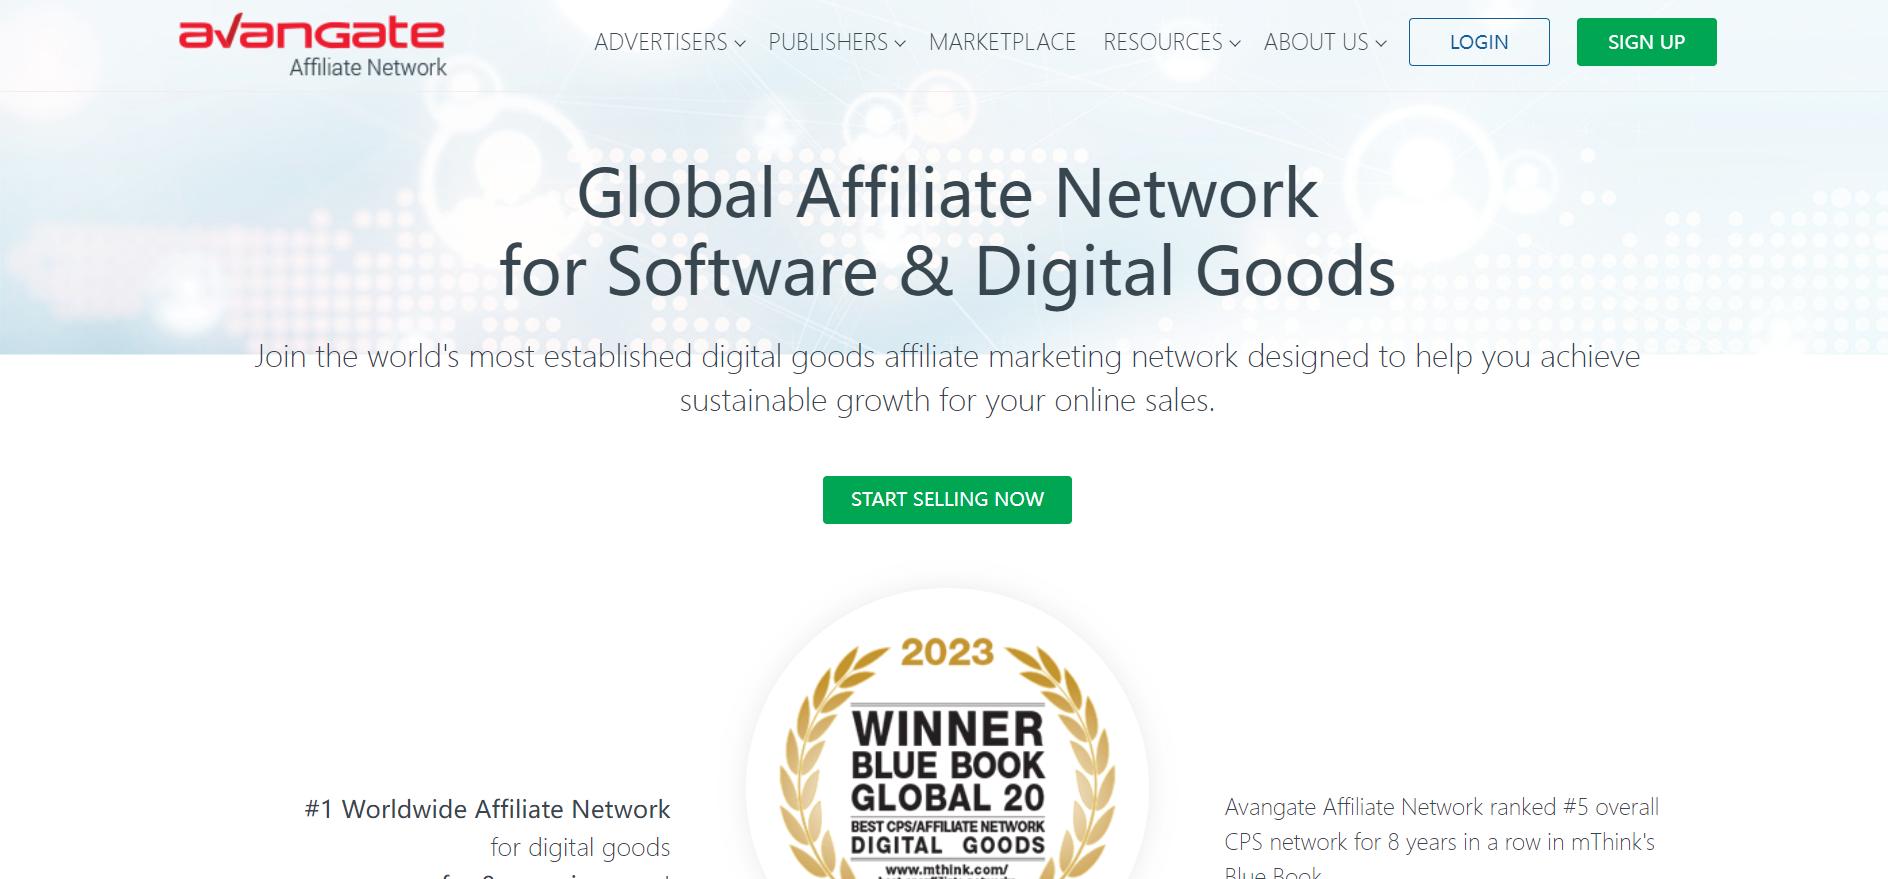 Avangate Affiliate Network官方網站介面